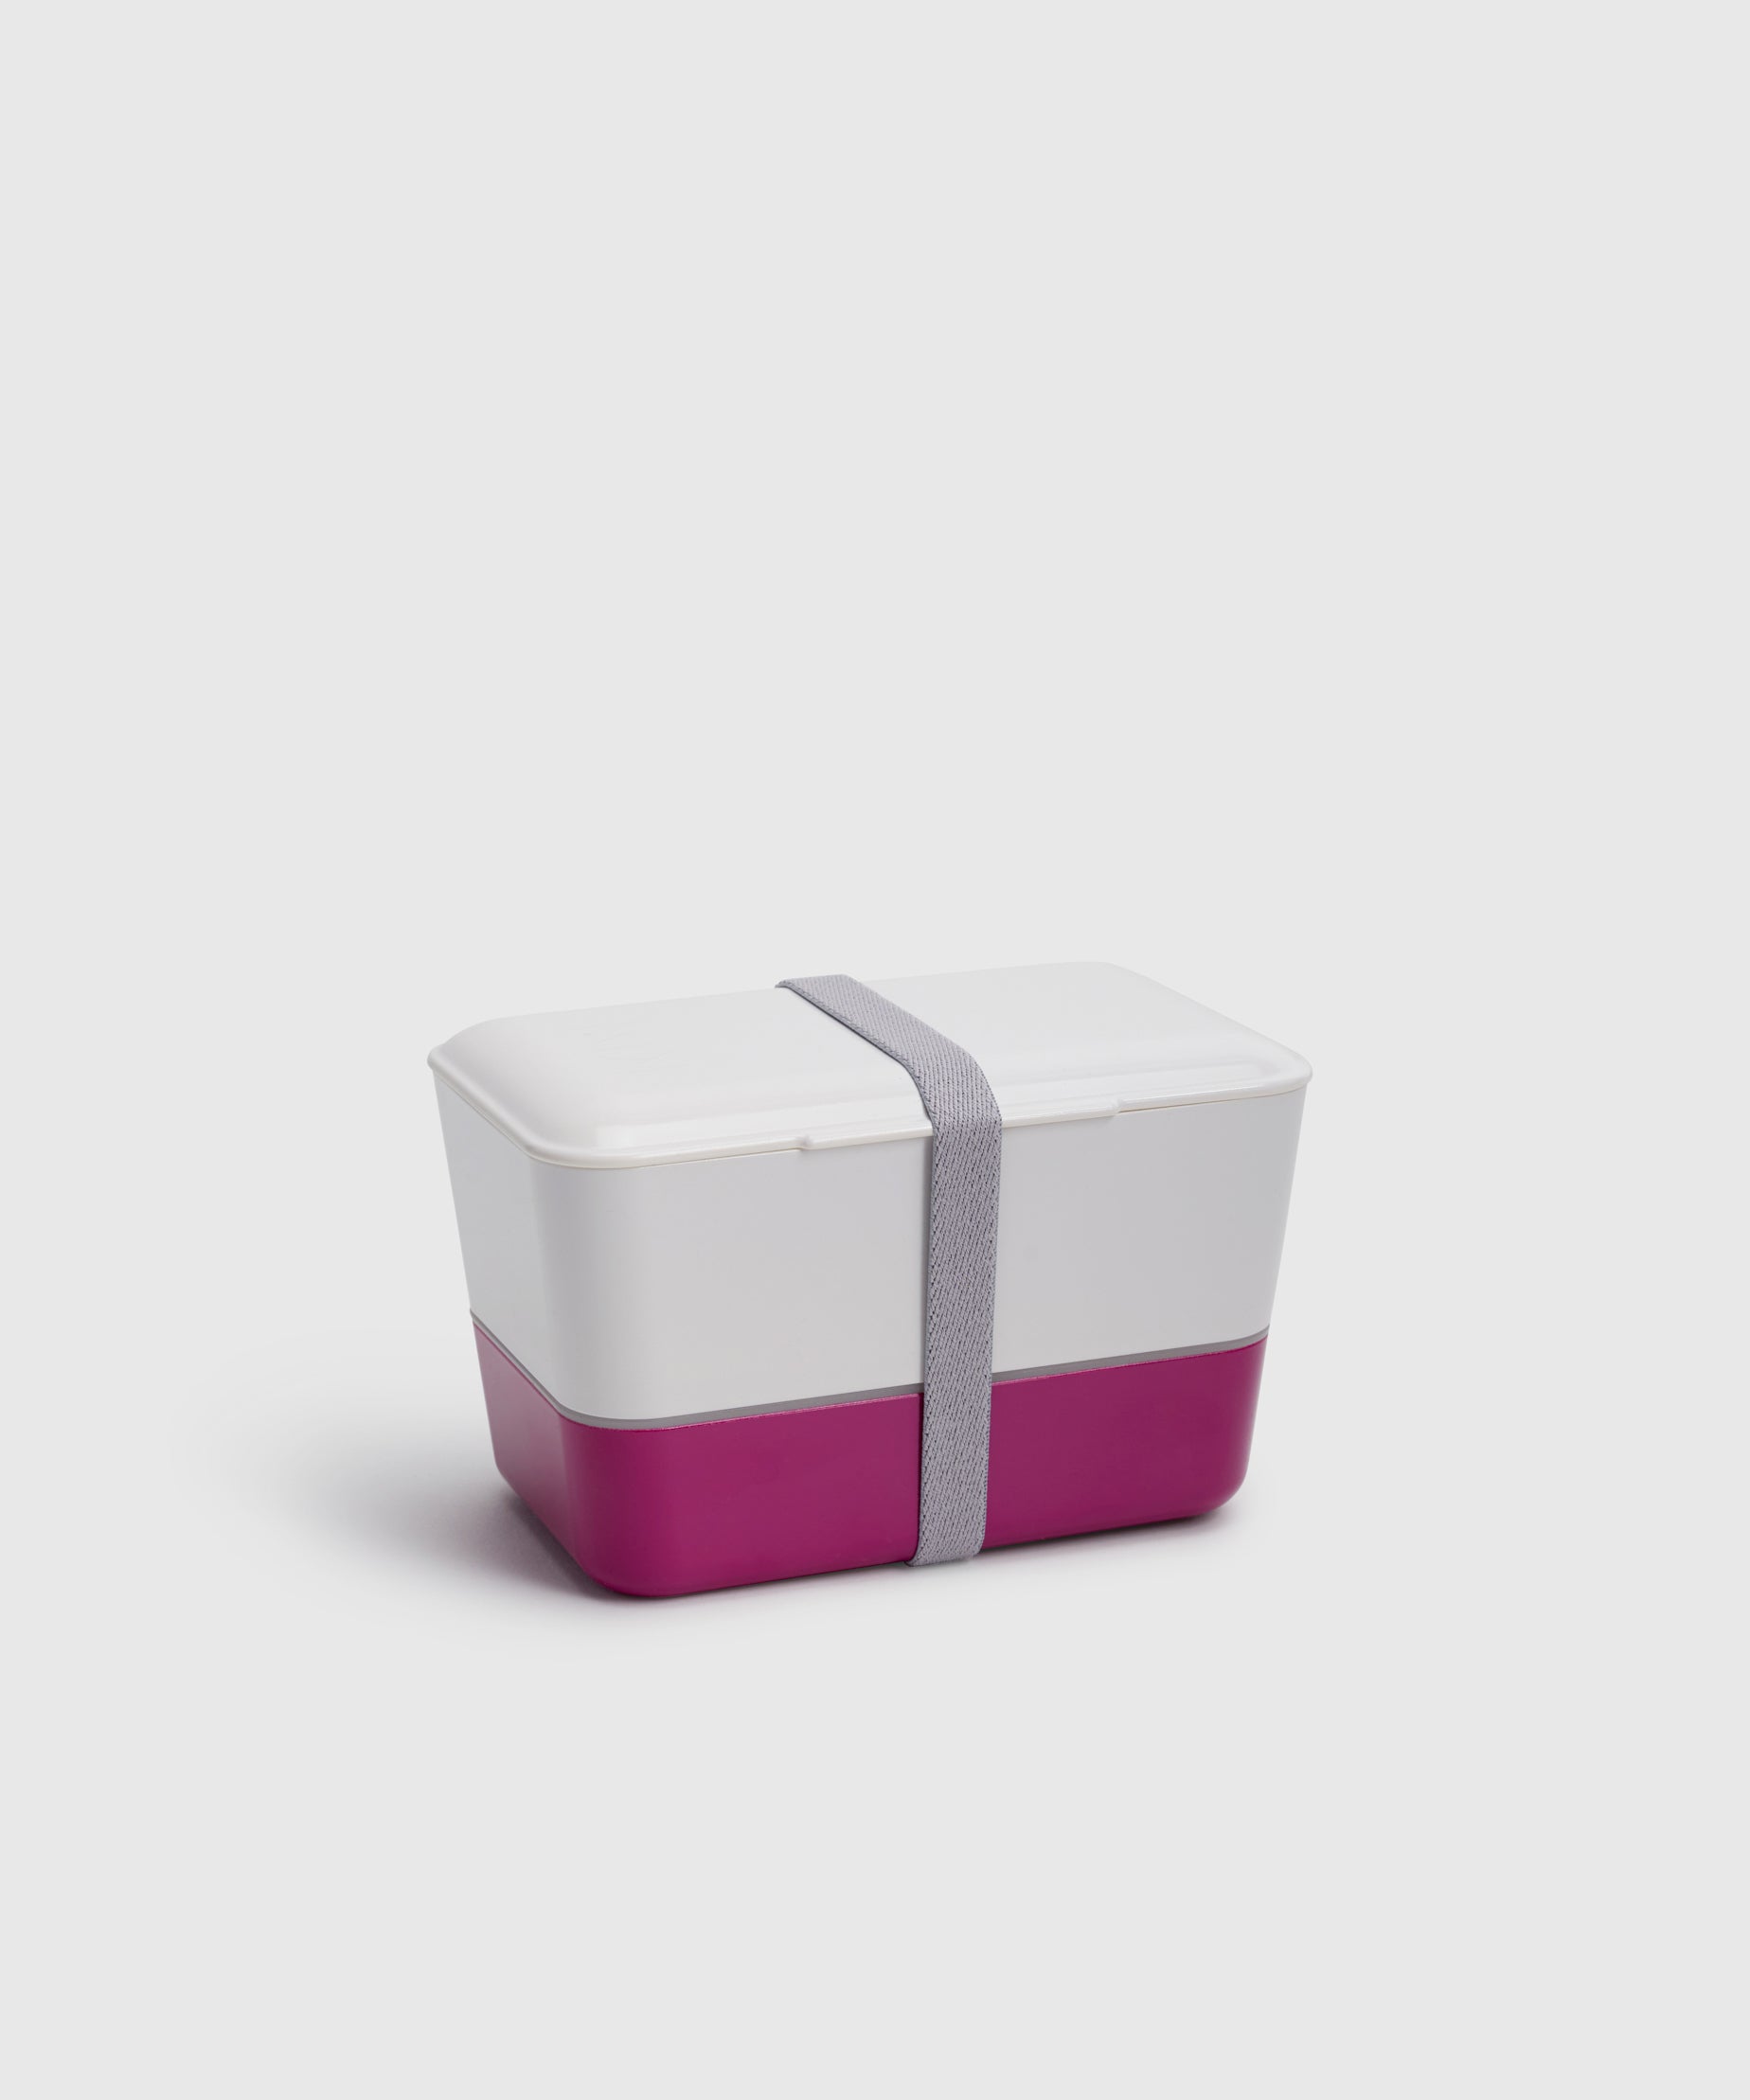 Baron Prematuur helder Modern Bento Snack Box | Home and Kitchen | Takenaka x KonMari